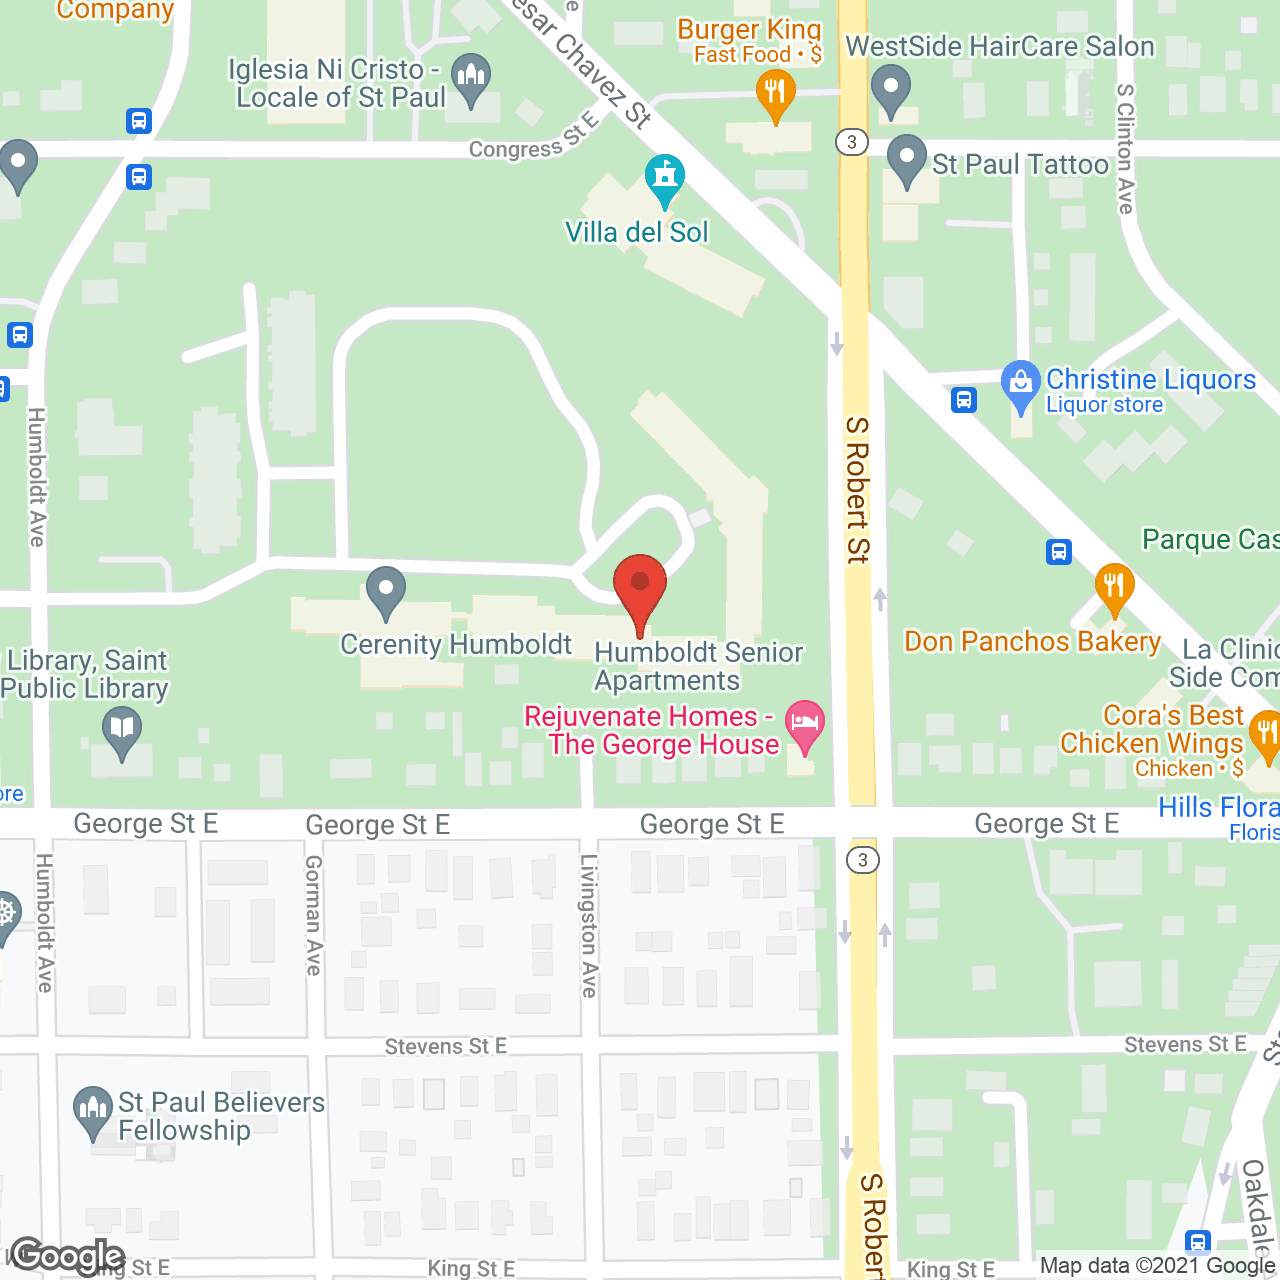 Humboldt Apartments Senior in google map